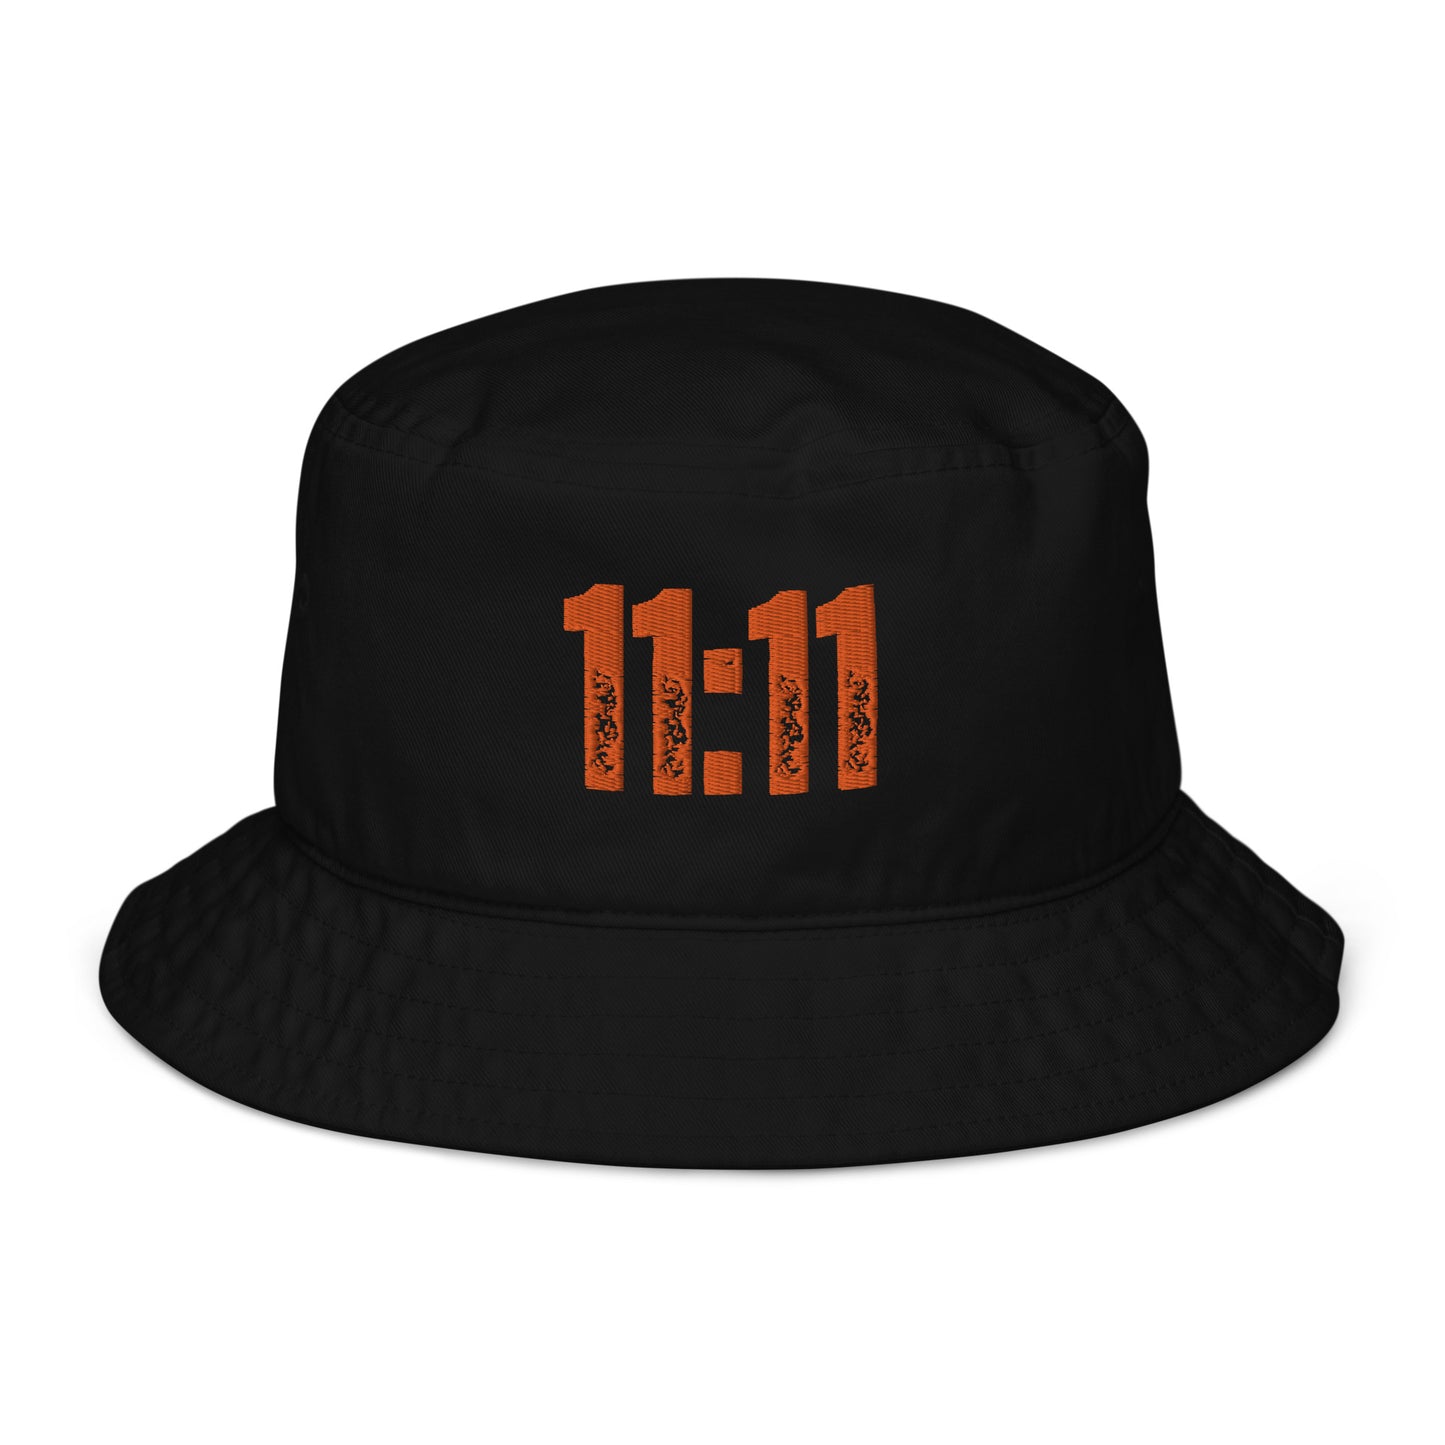 OCS 11:11 bucket hat